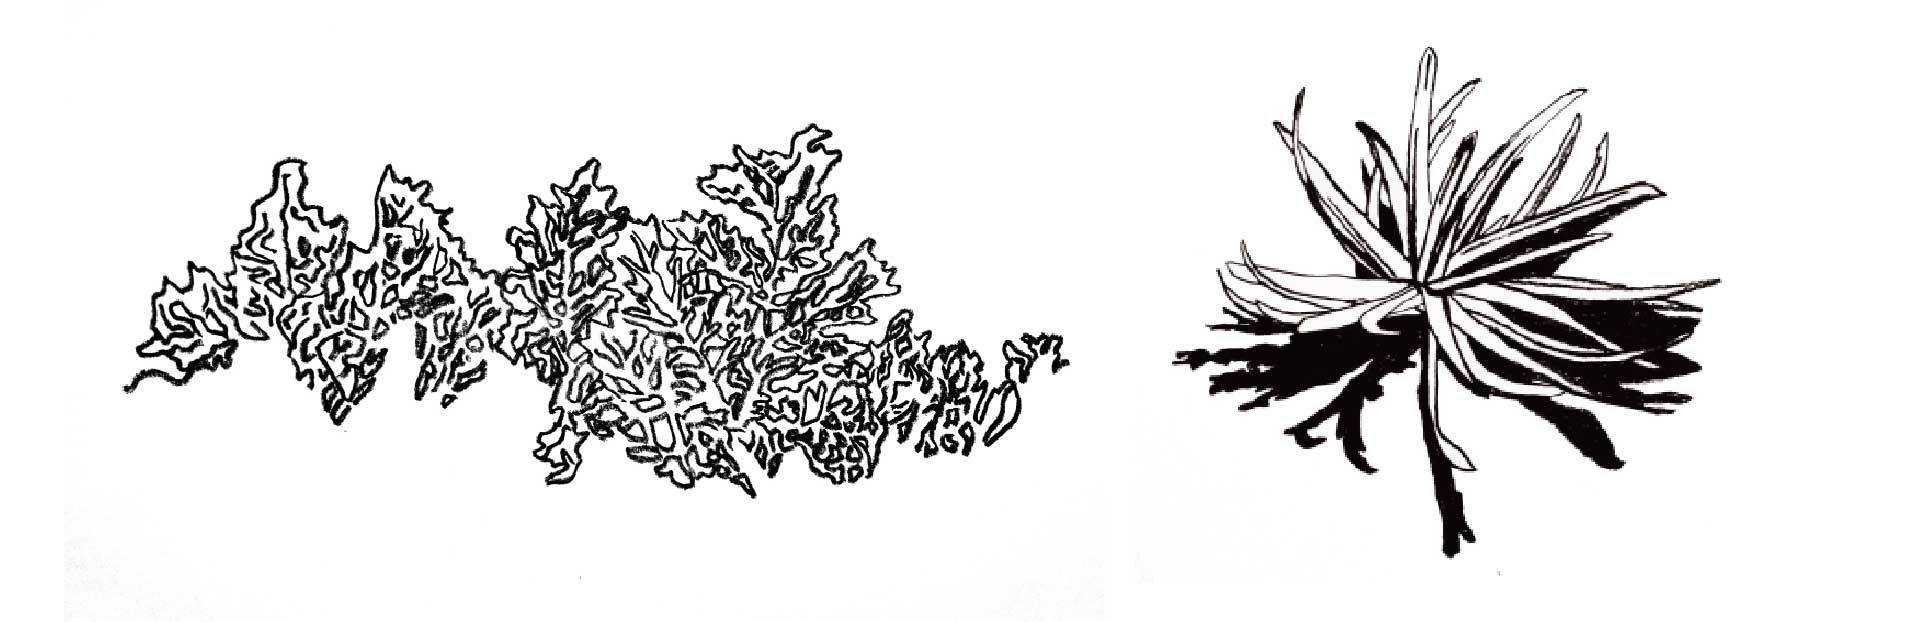 Shepard botanical sketches